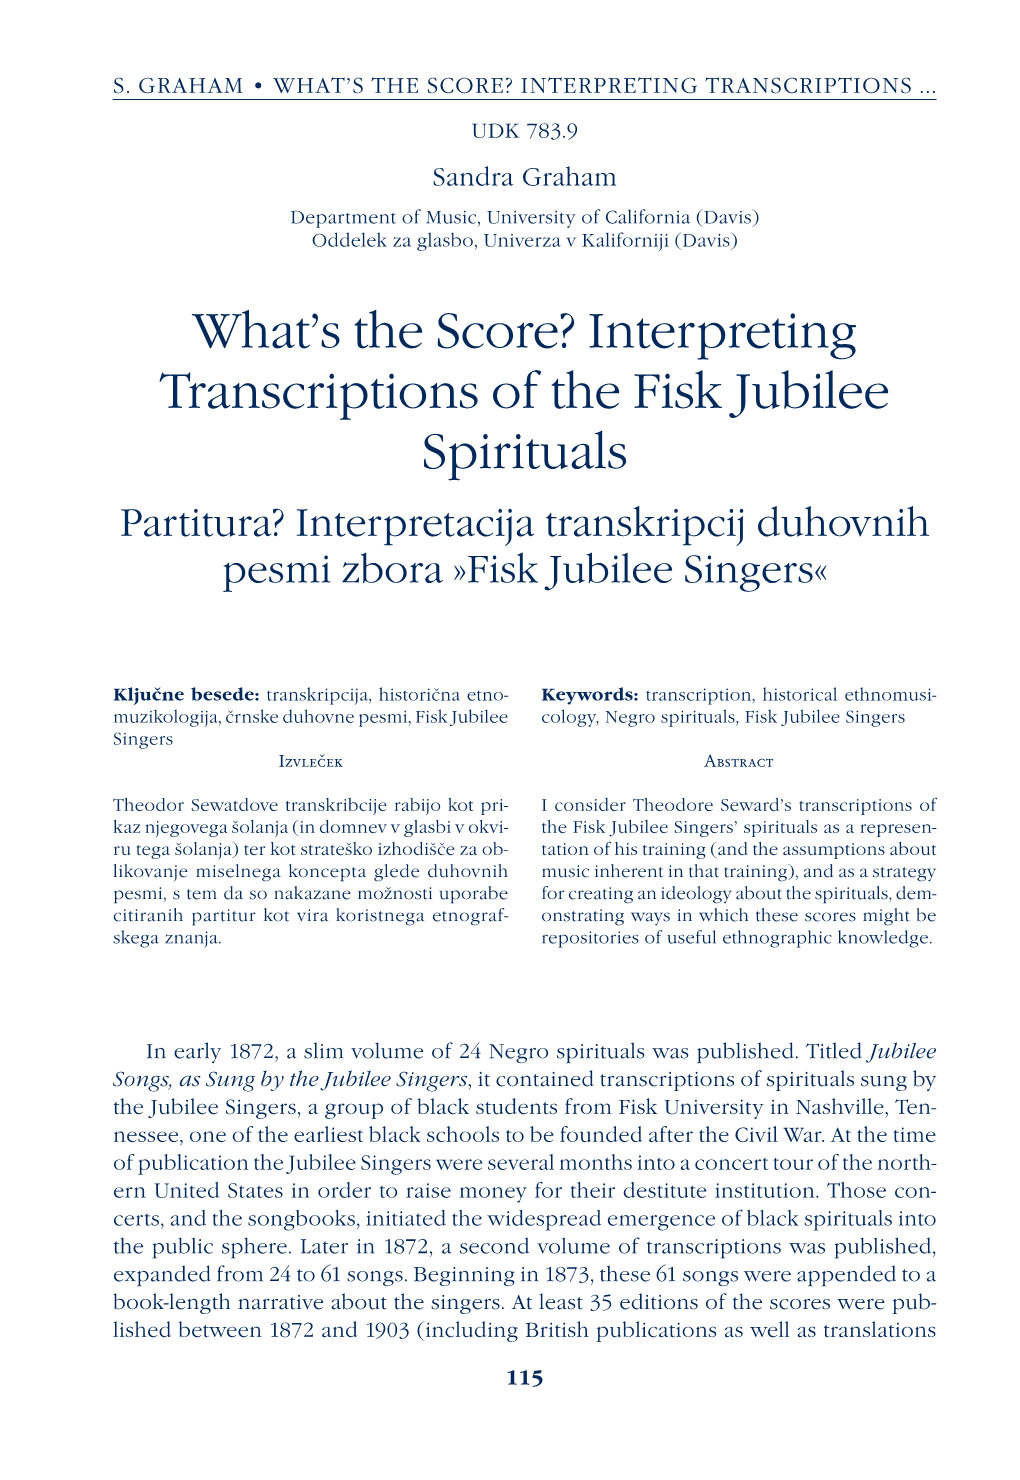 Interpreting Transcriptions of the Fisk Jubilee Spirituals Partitura? Interpretacija Transkripcij Duhovnih Pesmi Zbora »Fisk Jubilee Singers«